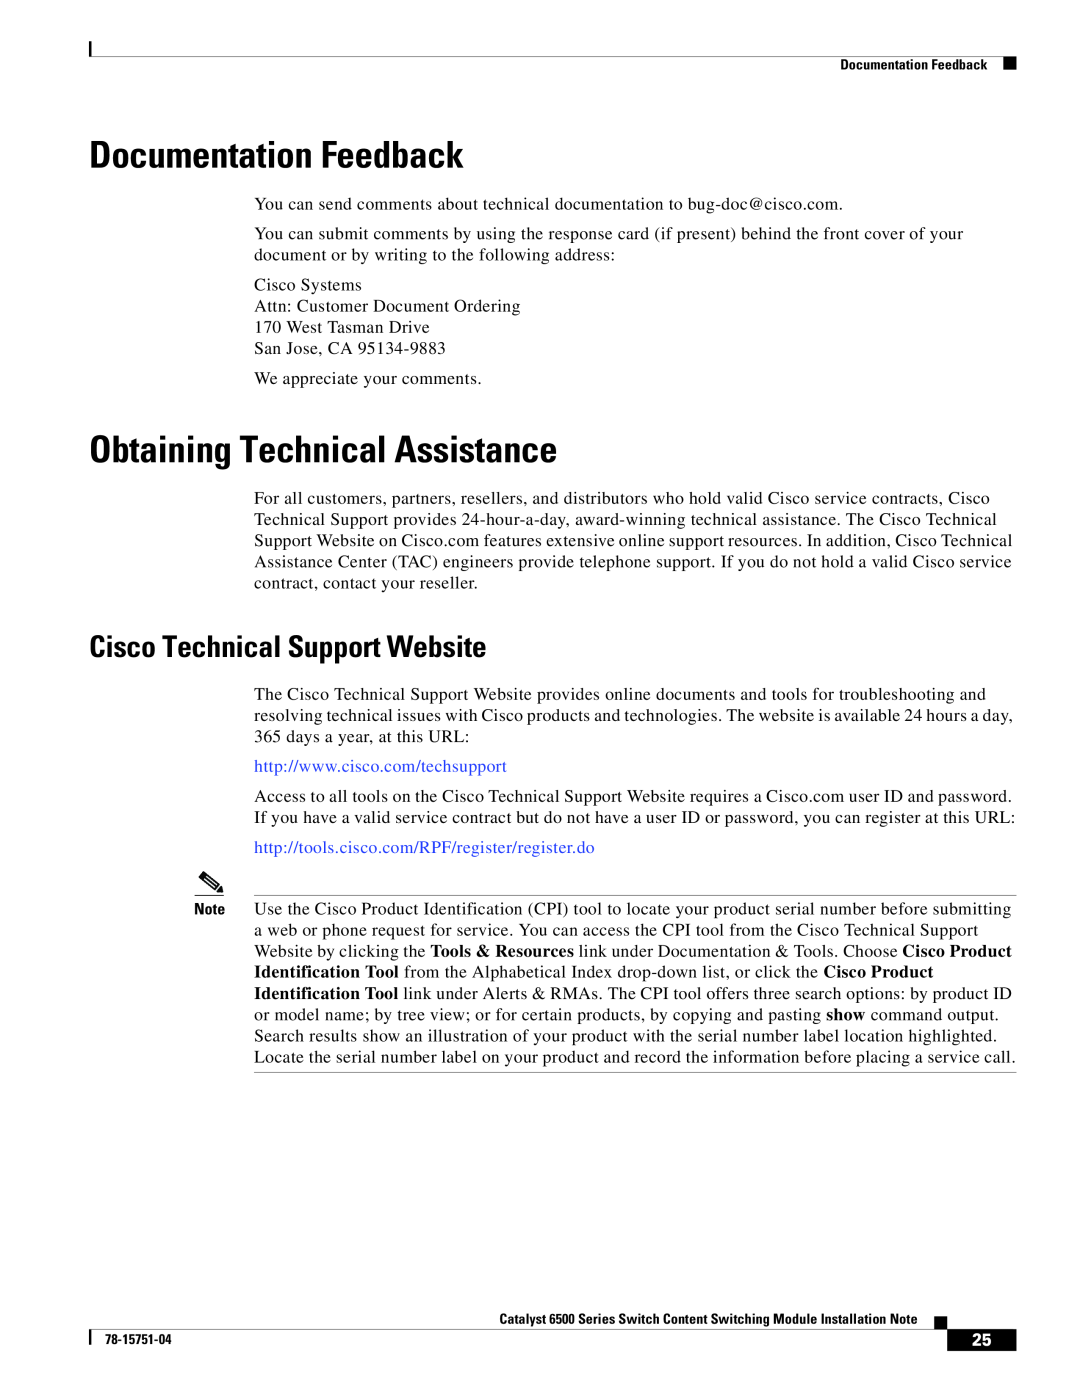 Cisco Systems WS-X6066-SLB-APC Documentation Feedback, Obtaining Technical Assistance, Cisco Technical Support Website 